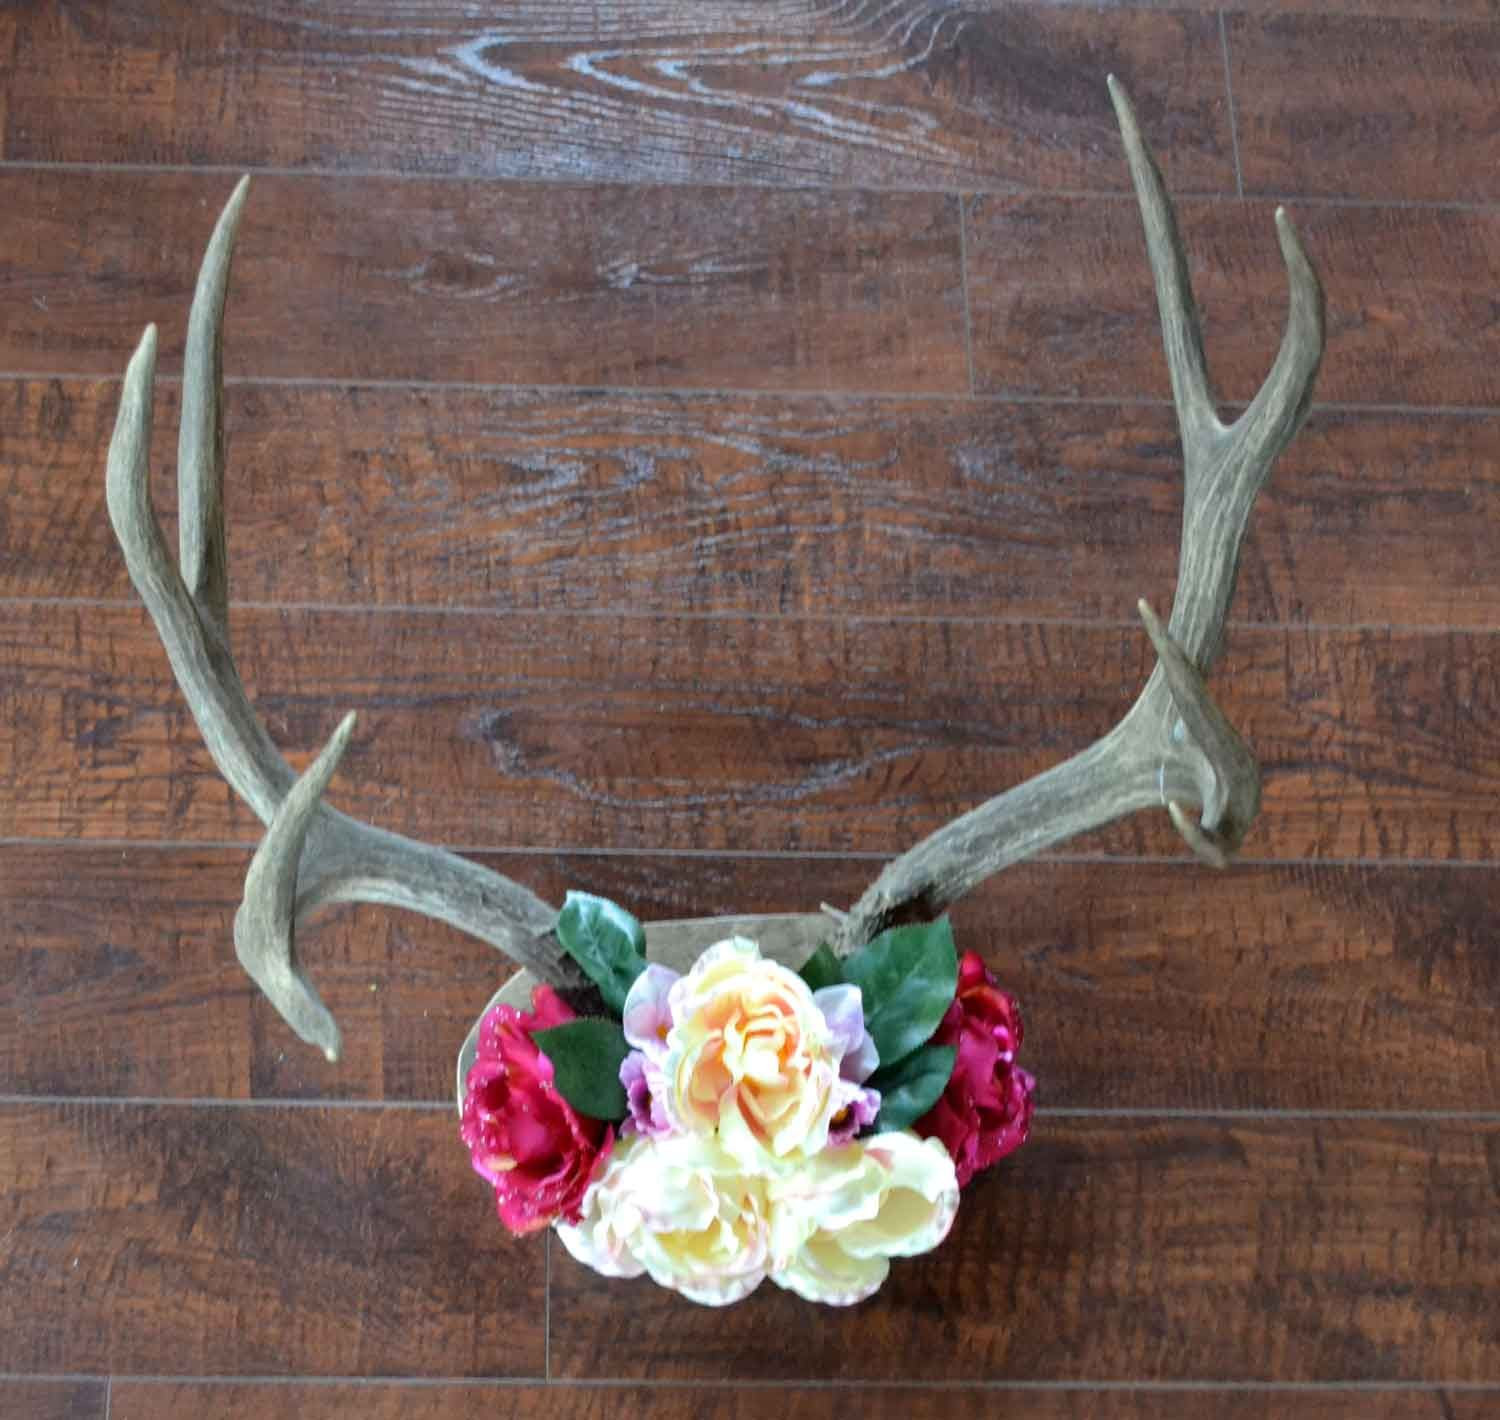 DIY Deer Antler Decor
 A chic rustic deer antler decor with flower crown Perfect